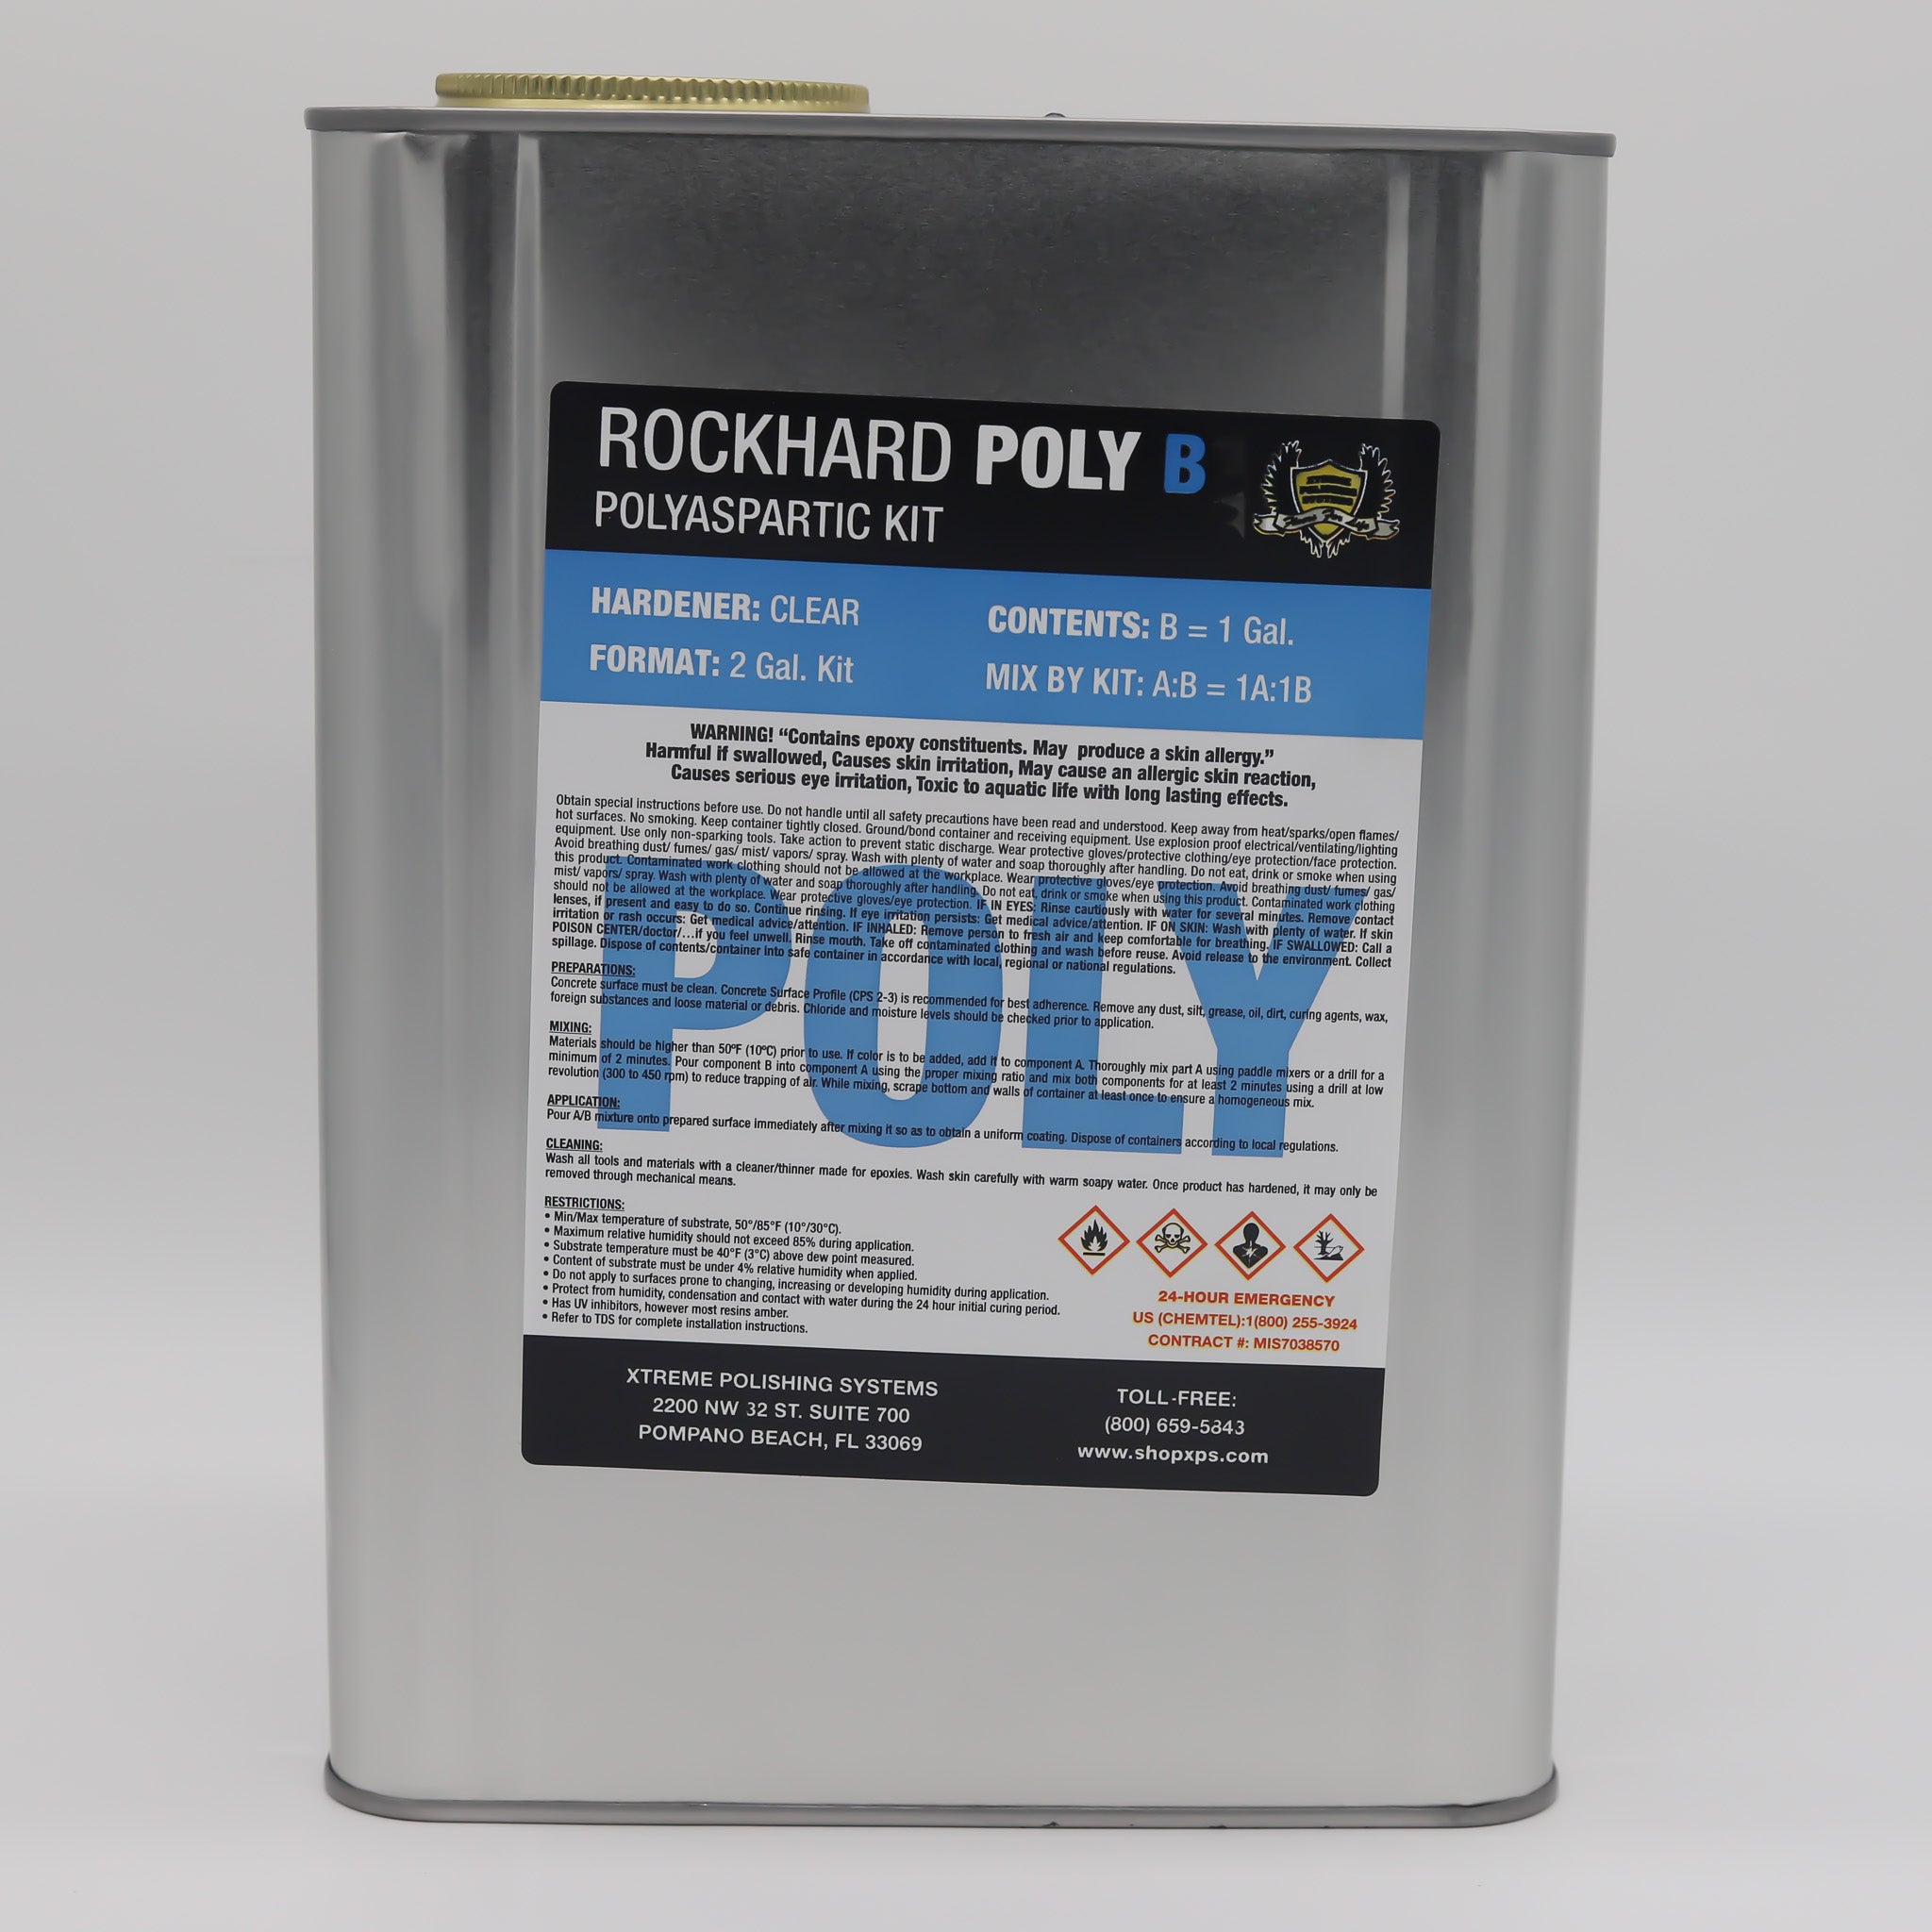 Rockhard Polyaspartic Kit - 2 Gallon Kit (1A:1B)